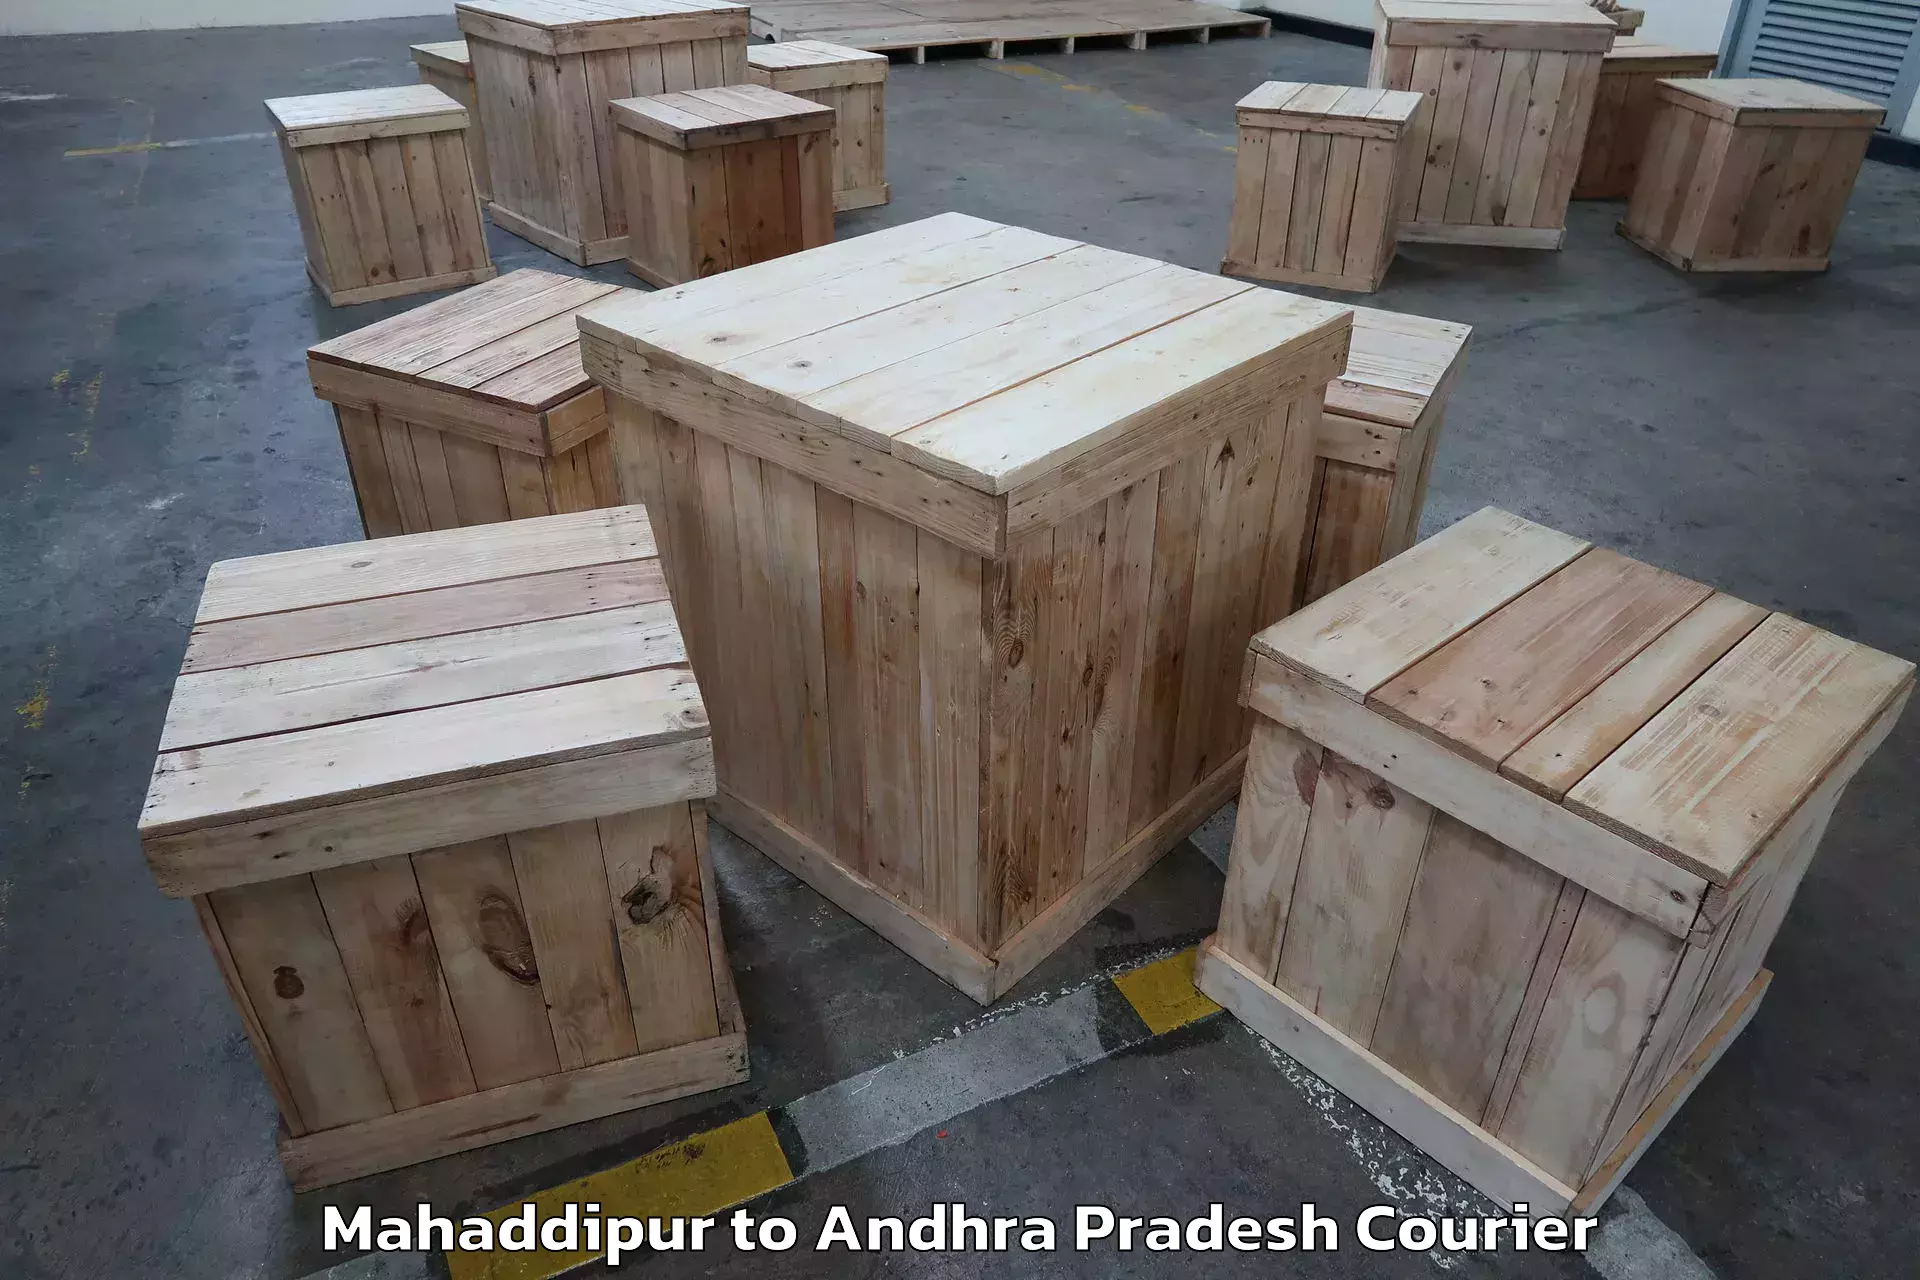 Expert moving and storage Mahaddipur to Andhra Pradesh